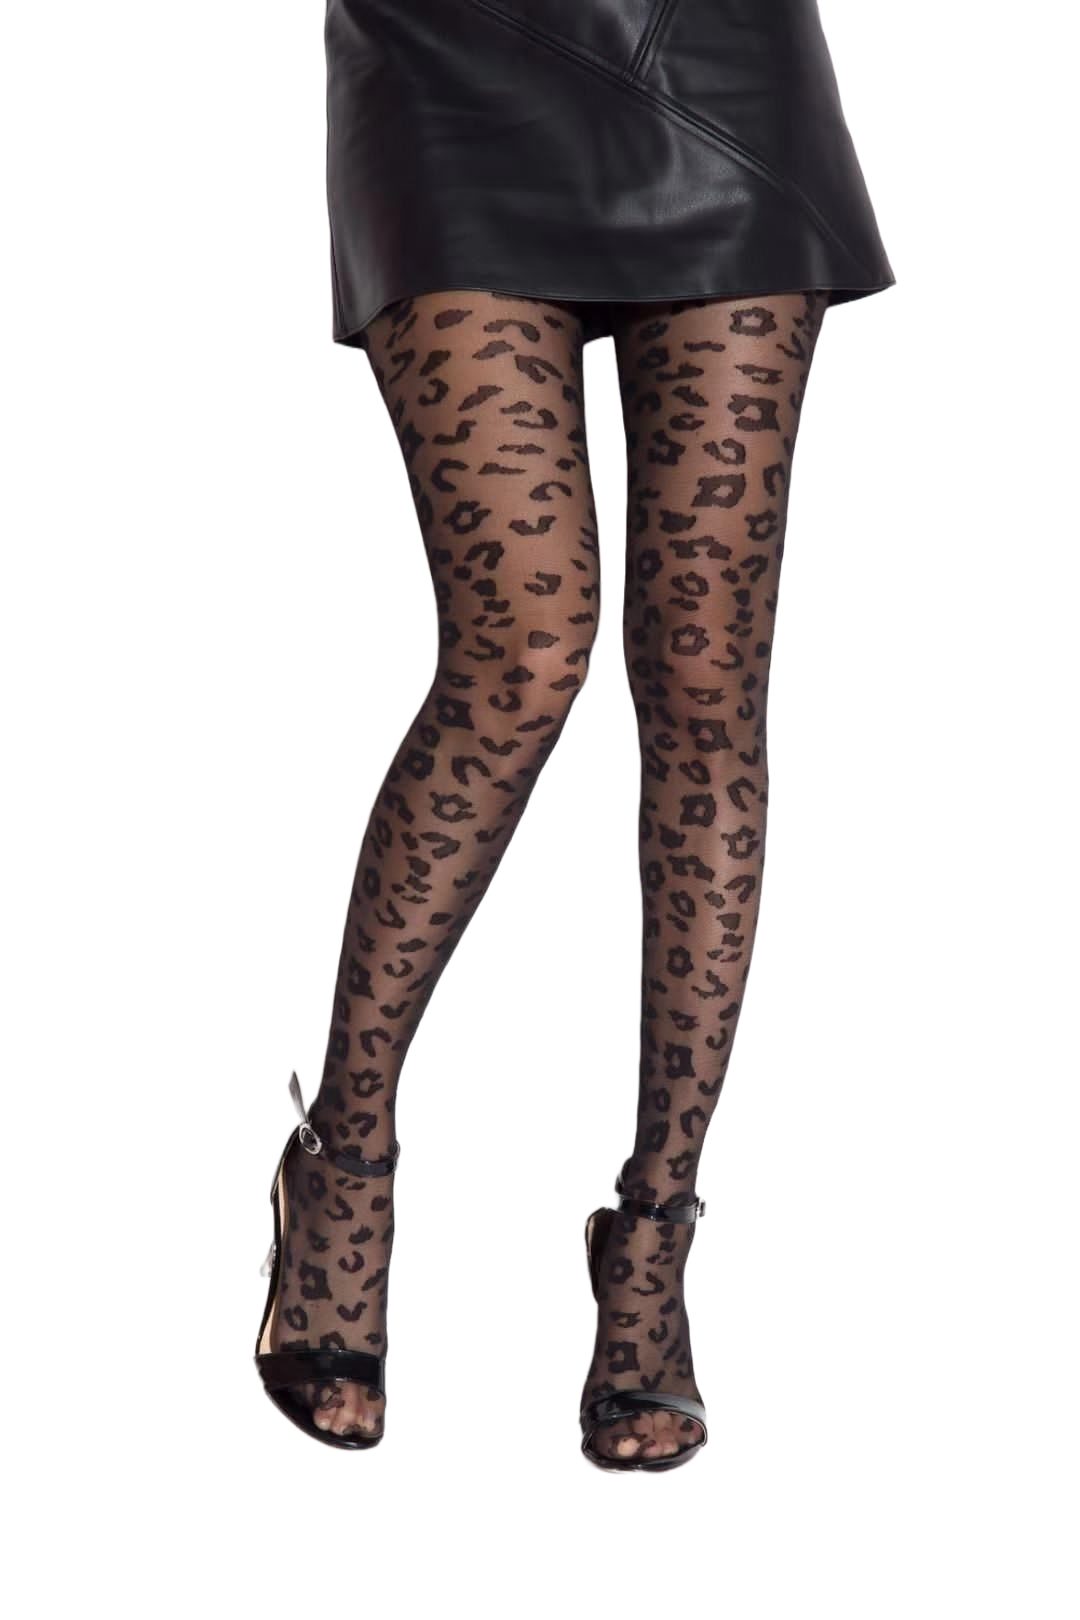 DEN schwarz Frauen 40 Nero cofi1453 Muster mit Strumpfhose Feinstrumpfhose Damen Hose Socken